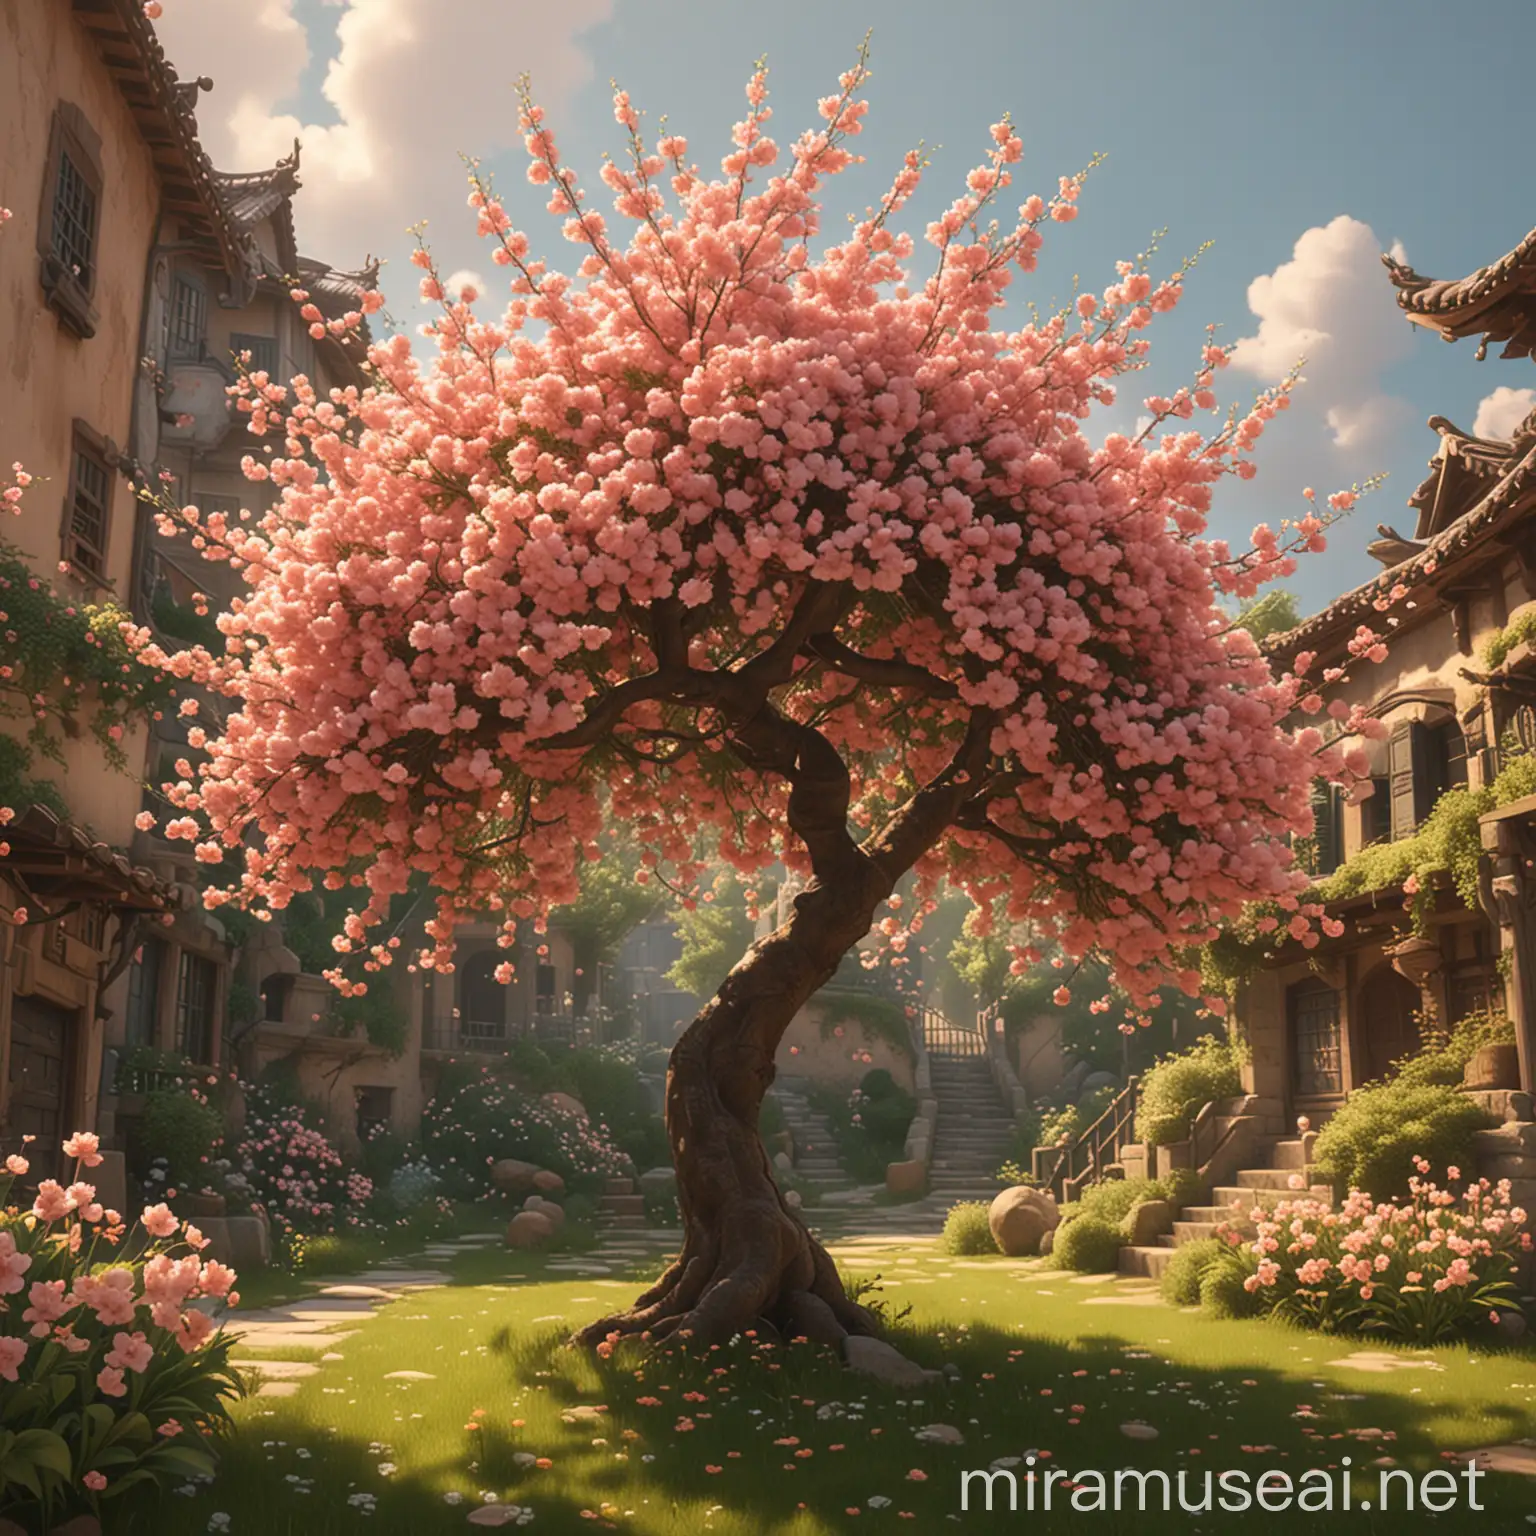 A lush peach blossom tree，Pixar style